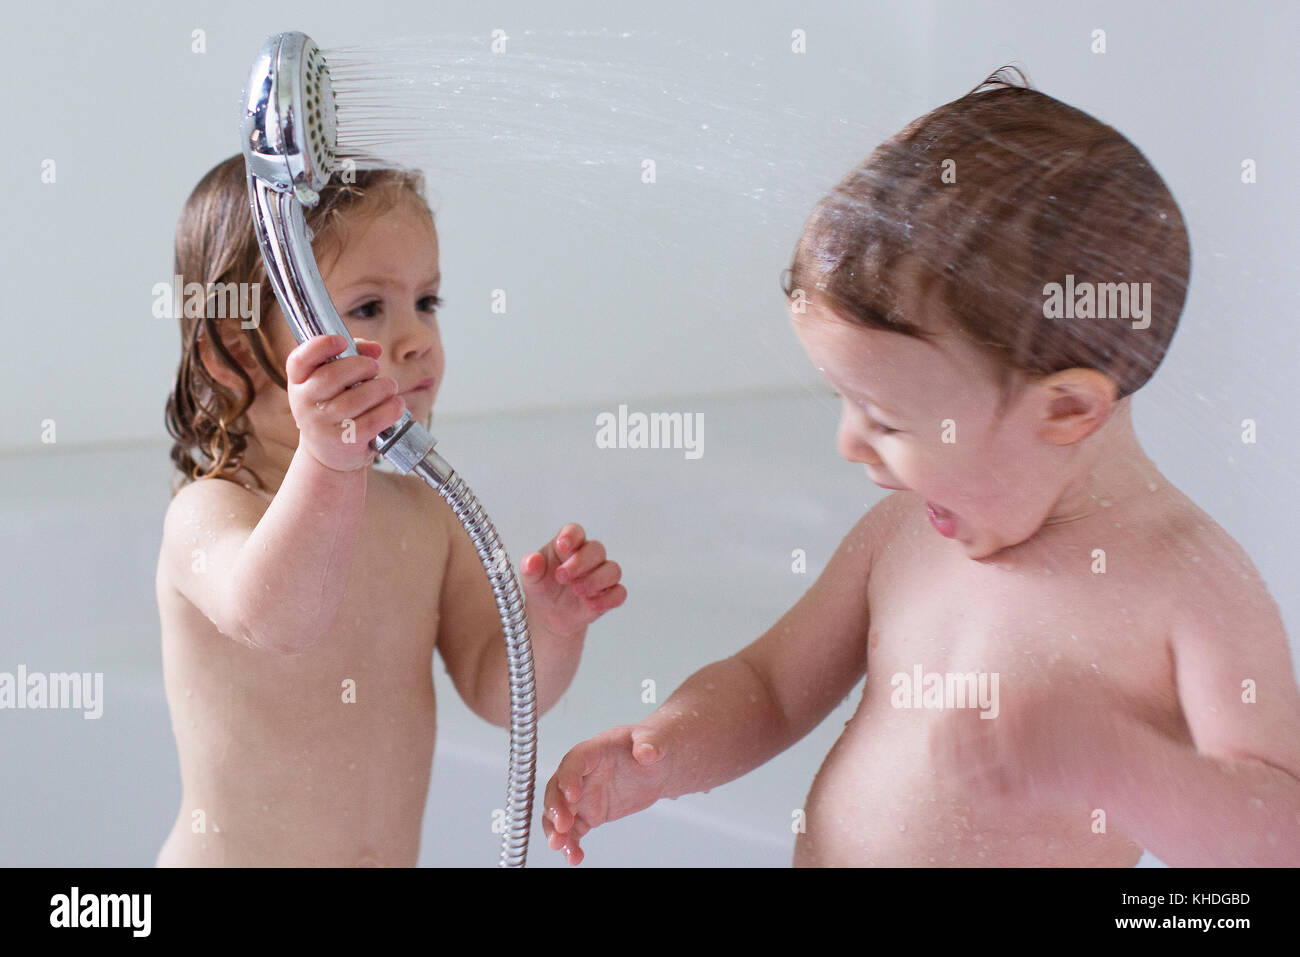 Children playing in bathtub Stock Photo